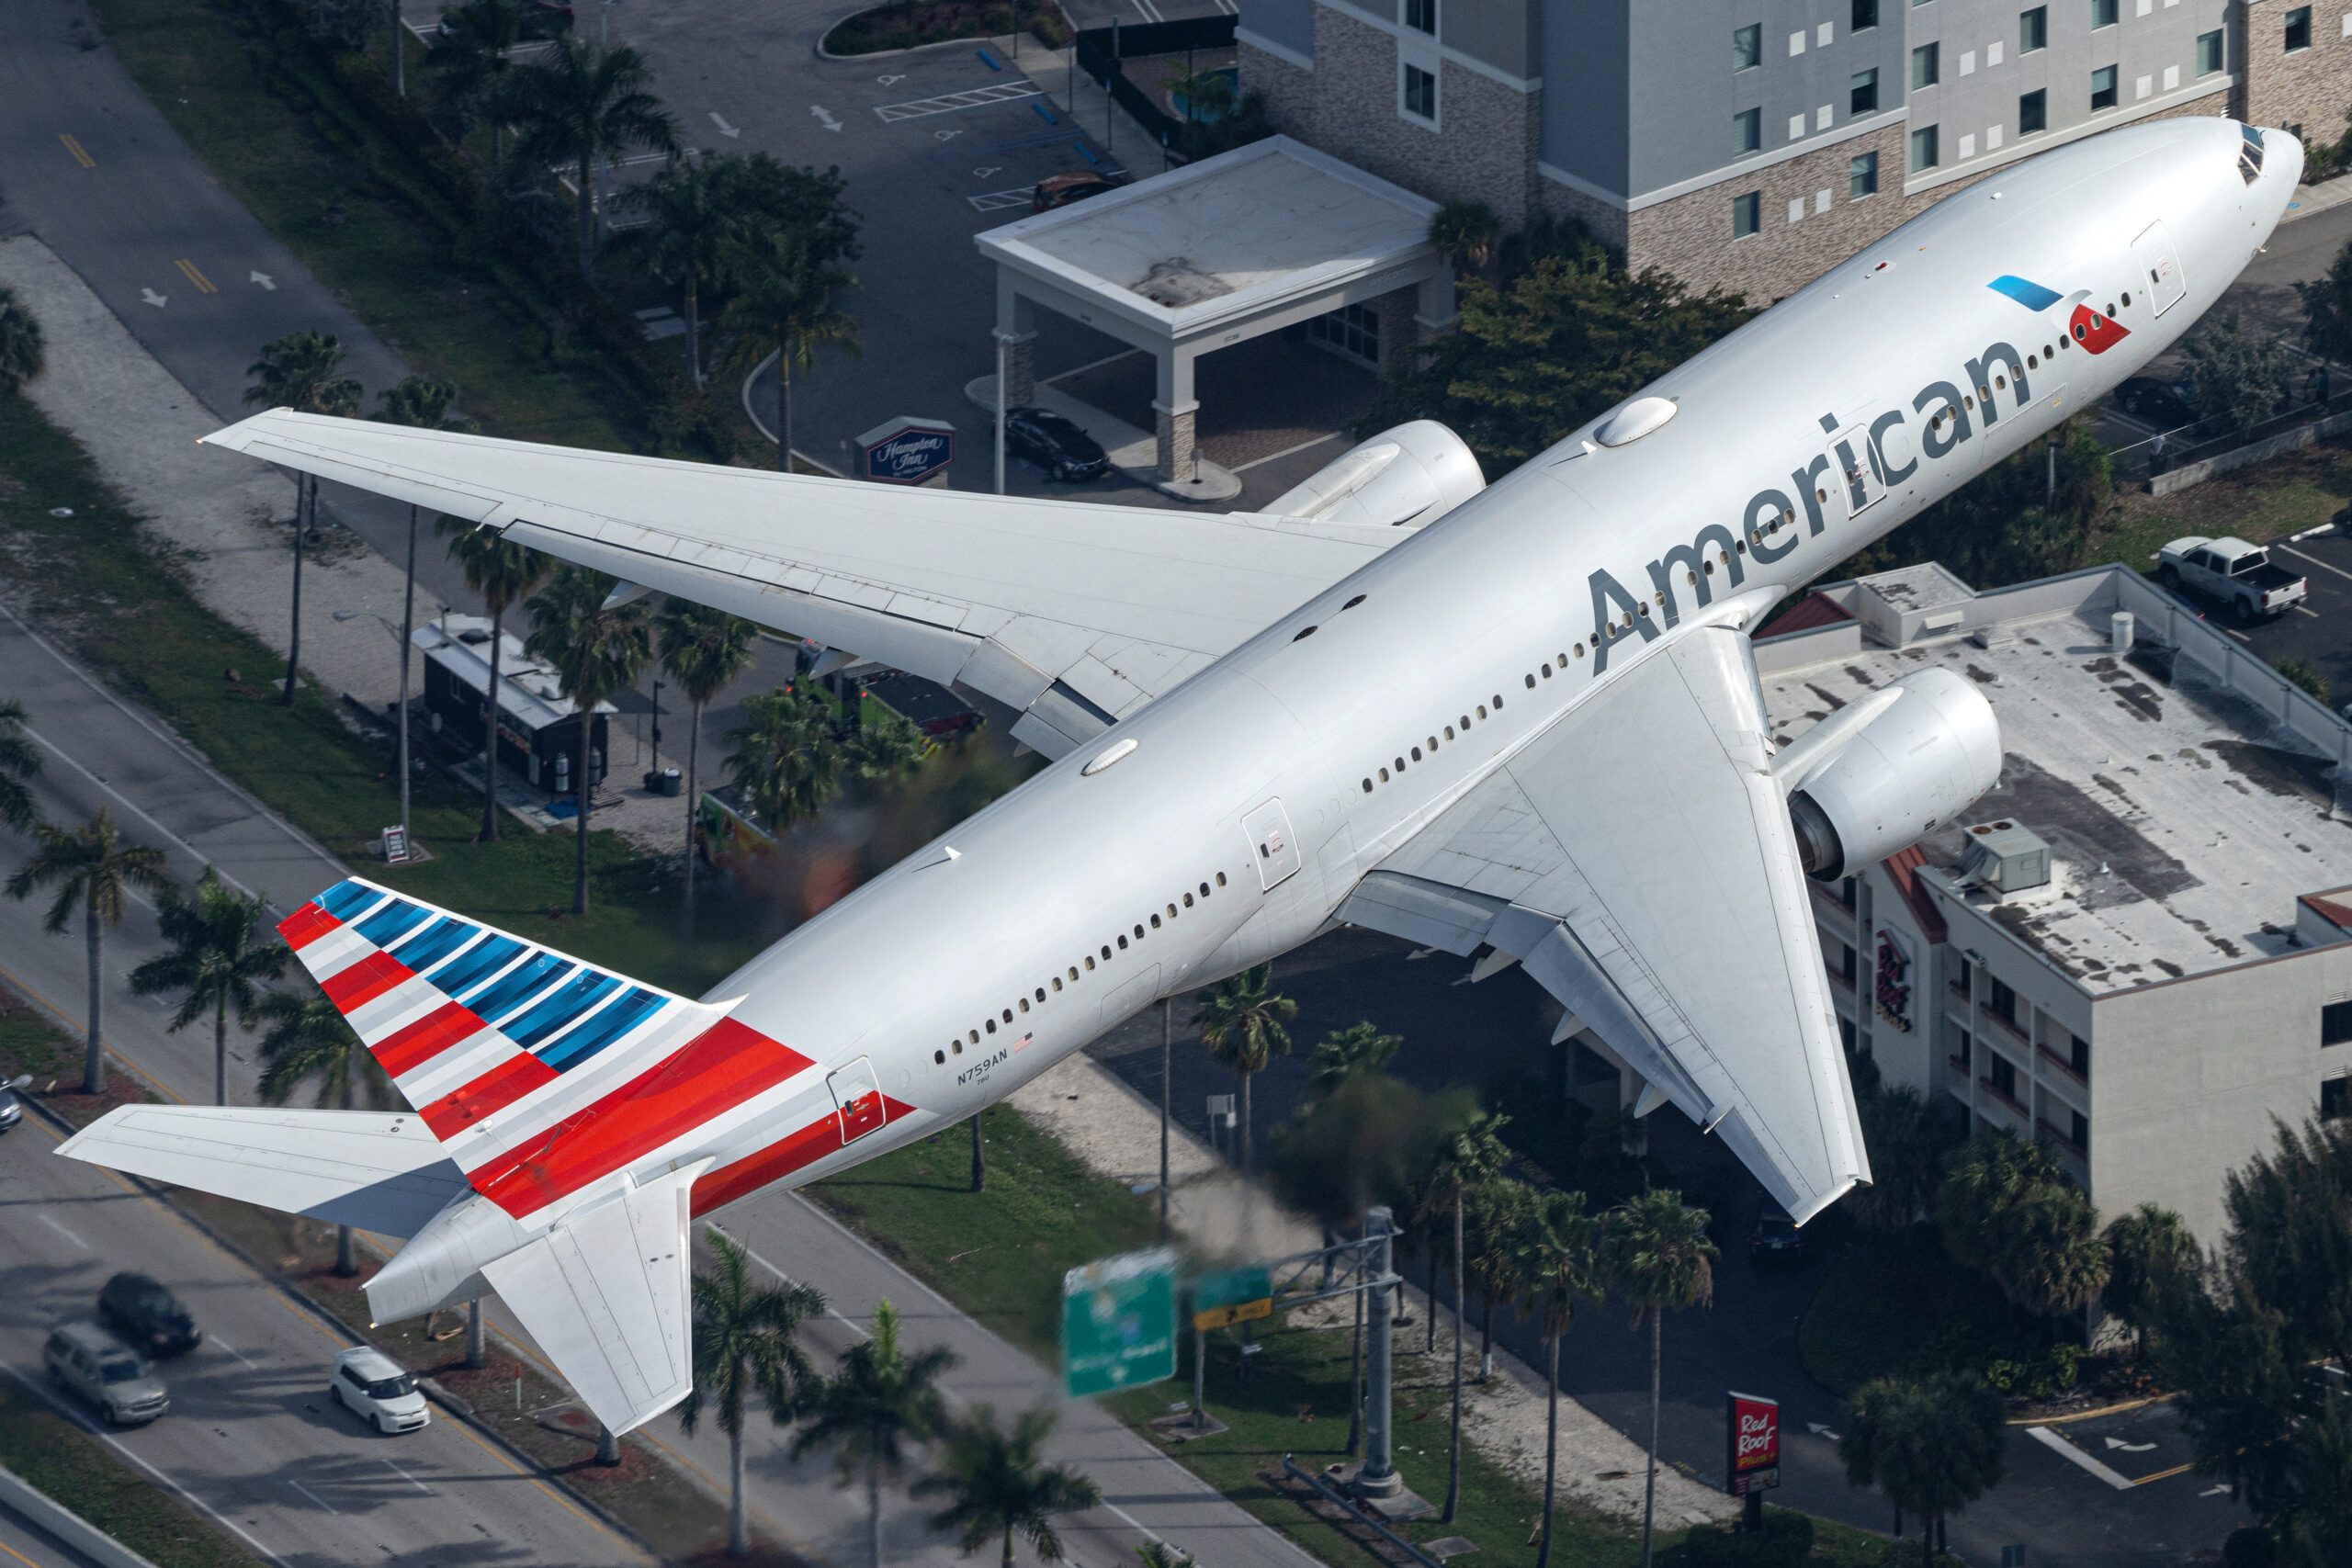 American Boeing 777-200ER